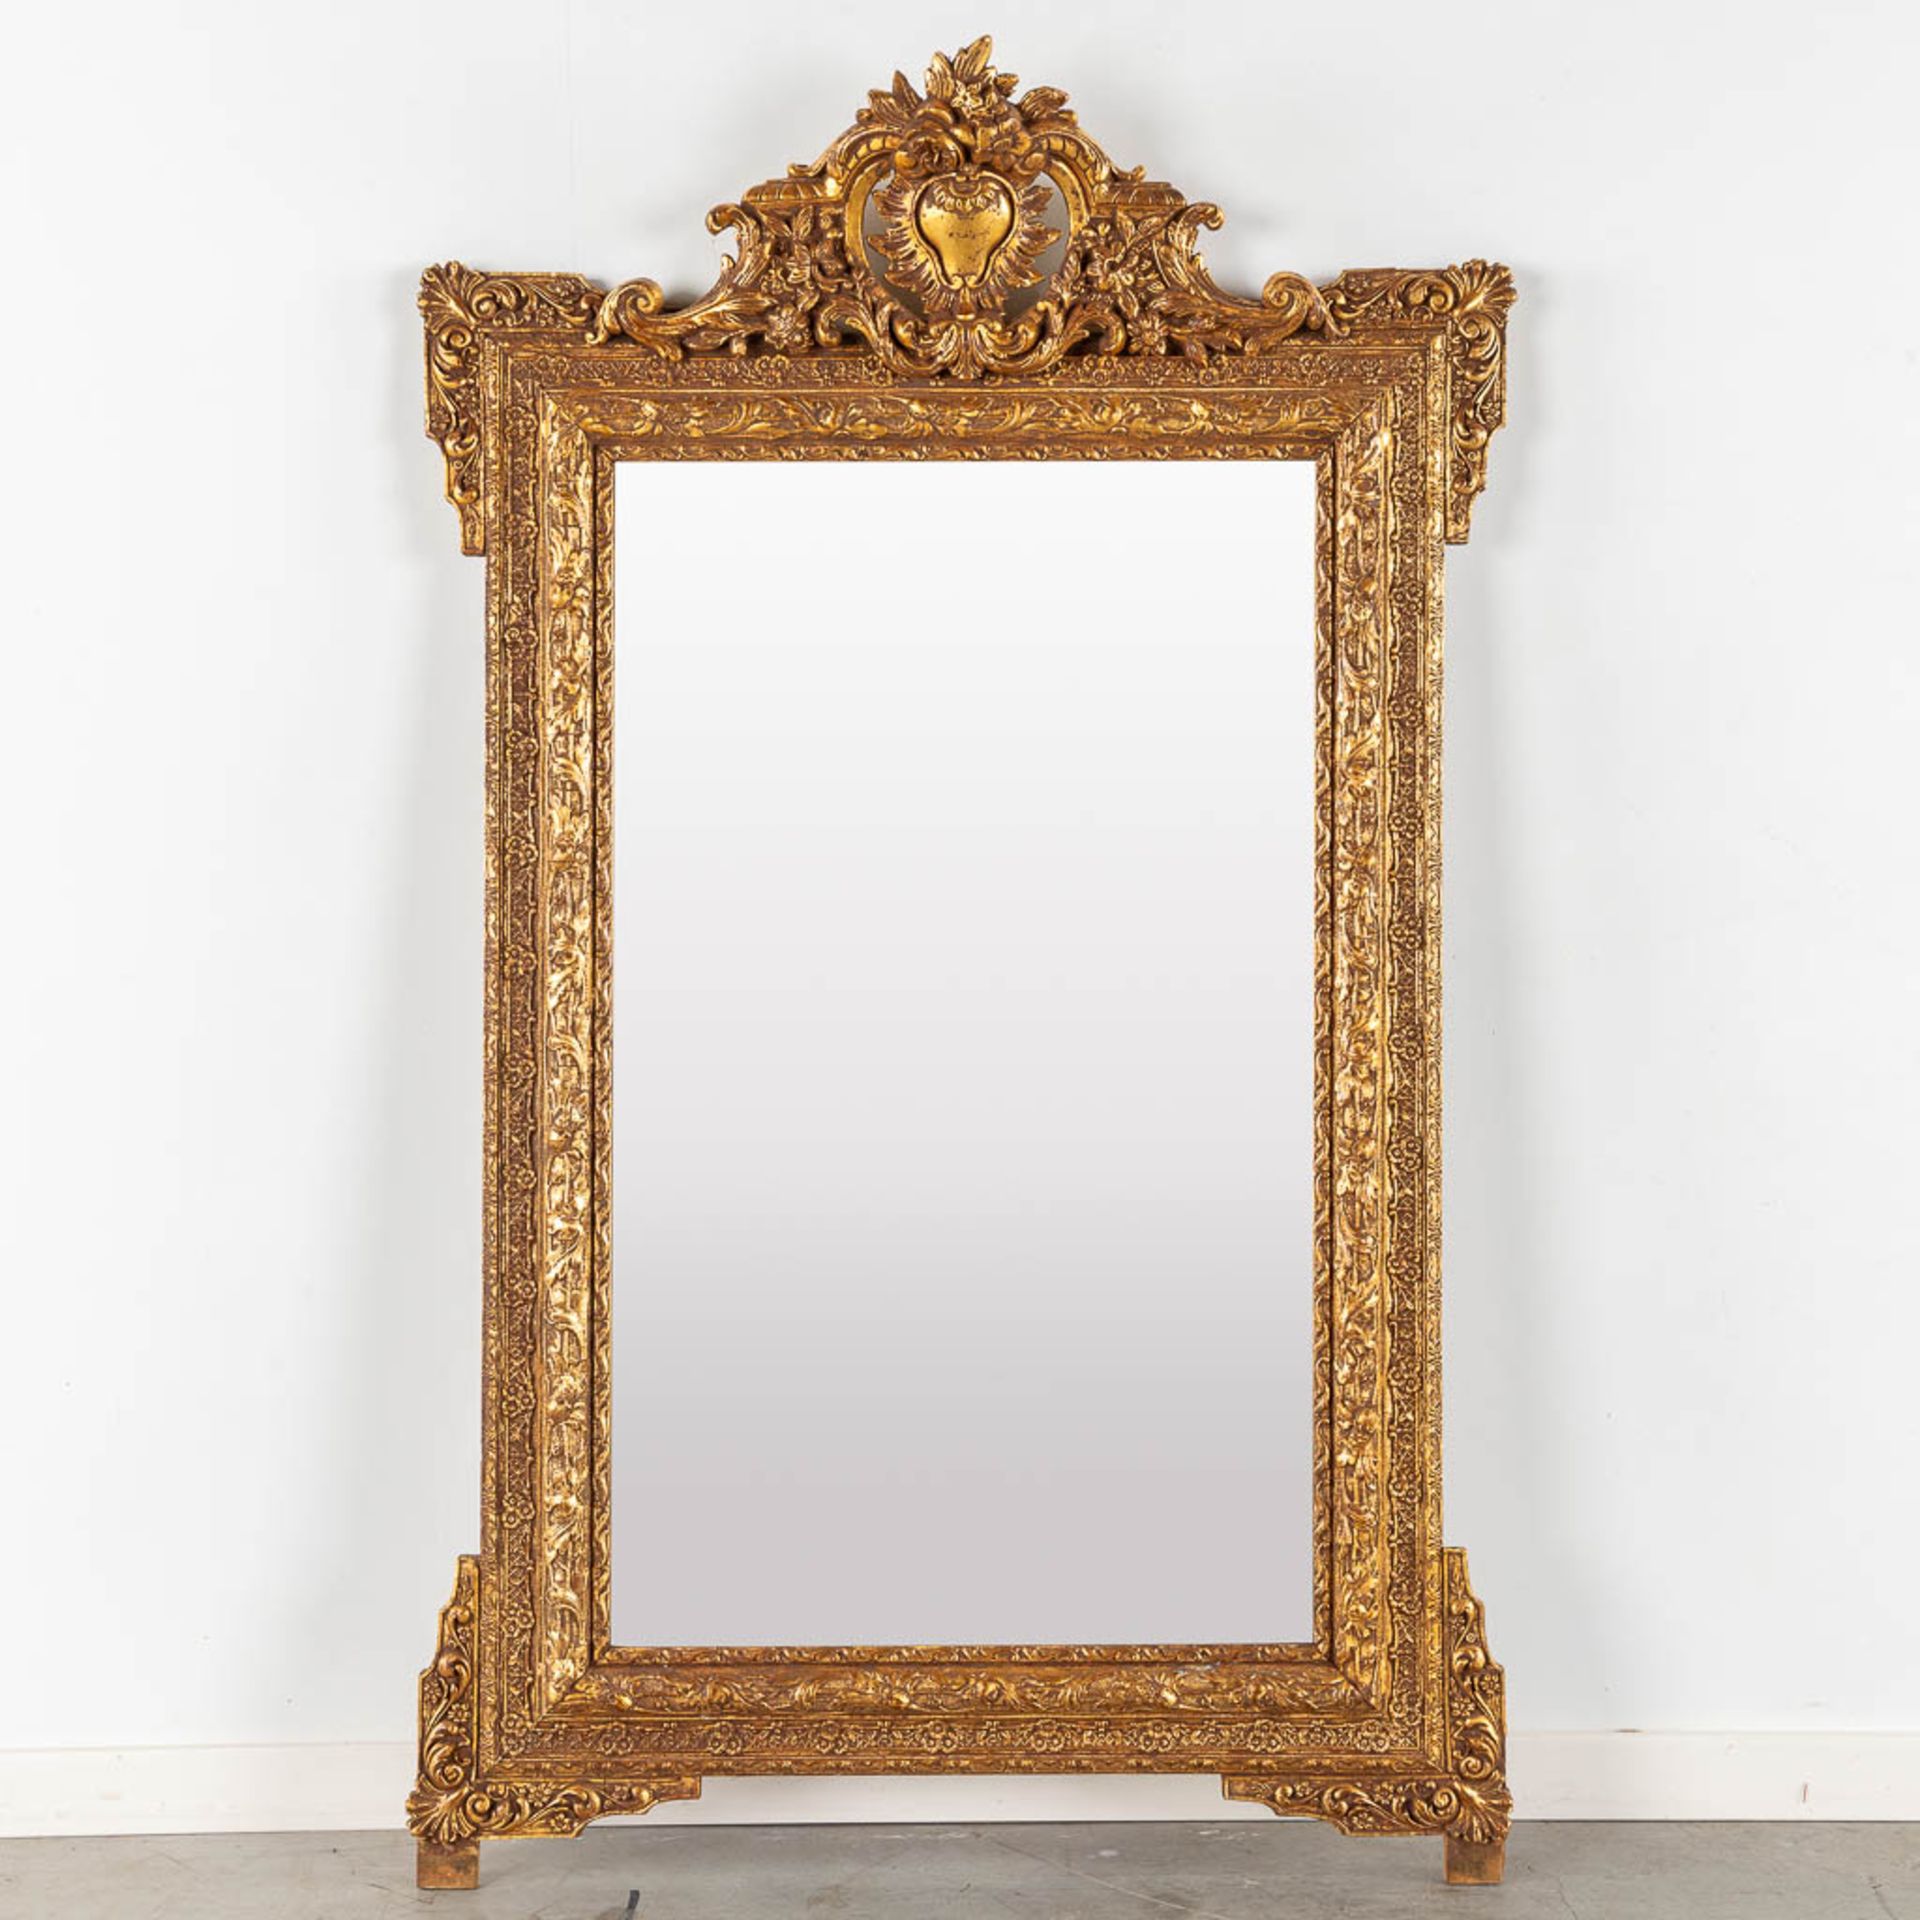 A mirror, sculptured wood and gilt stucco. Circa 1900. (W:135 x H:85 cm)